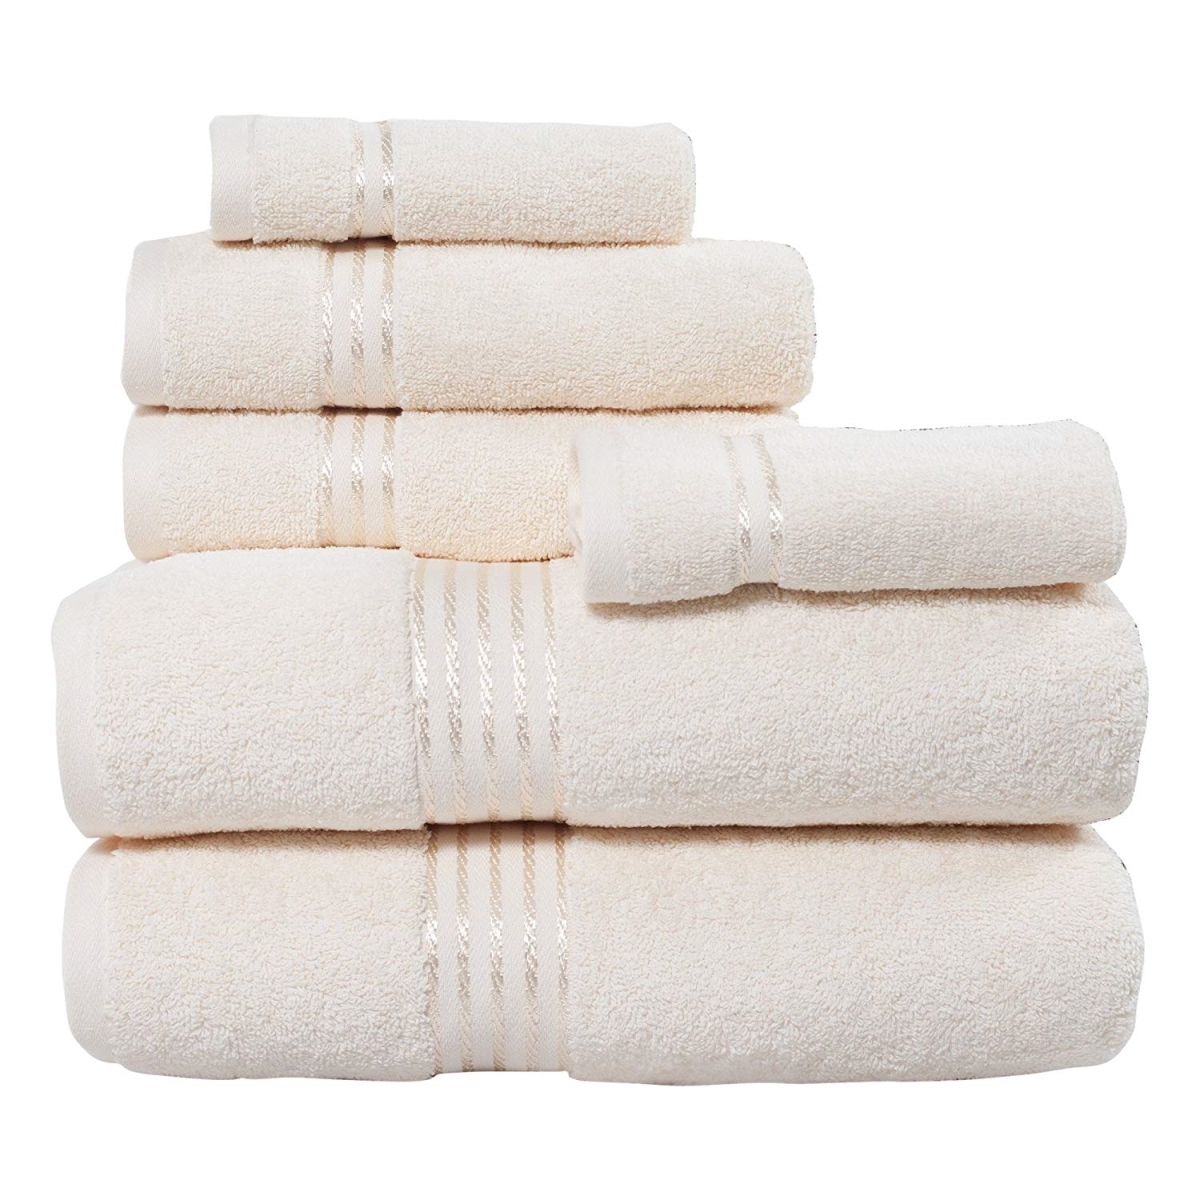 67a-01790 100 Percent Cotton Hotel 6 Piece Towel Set - Ivory